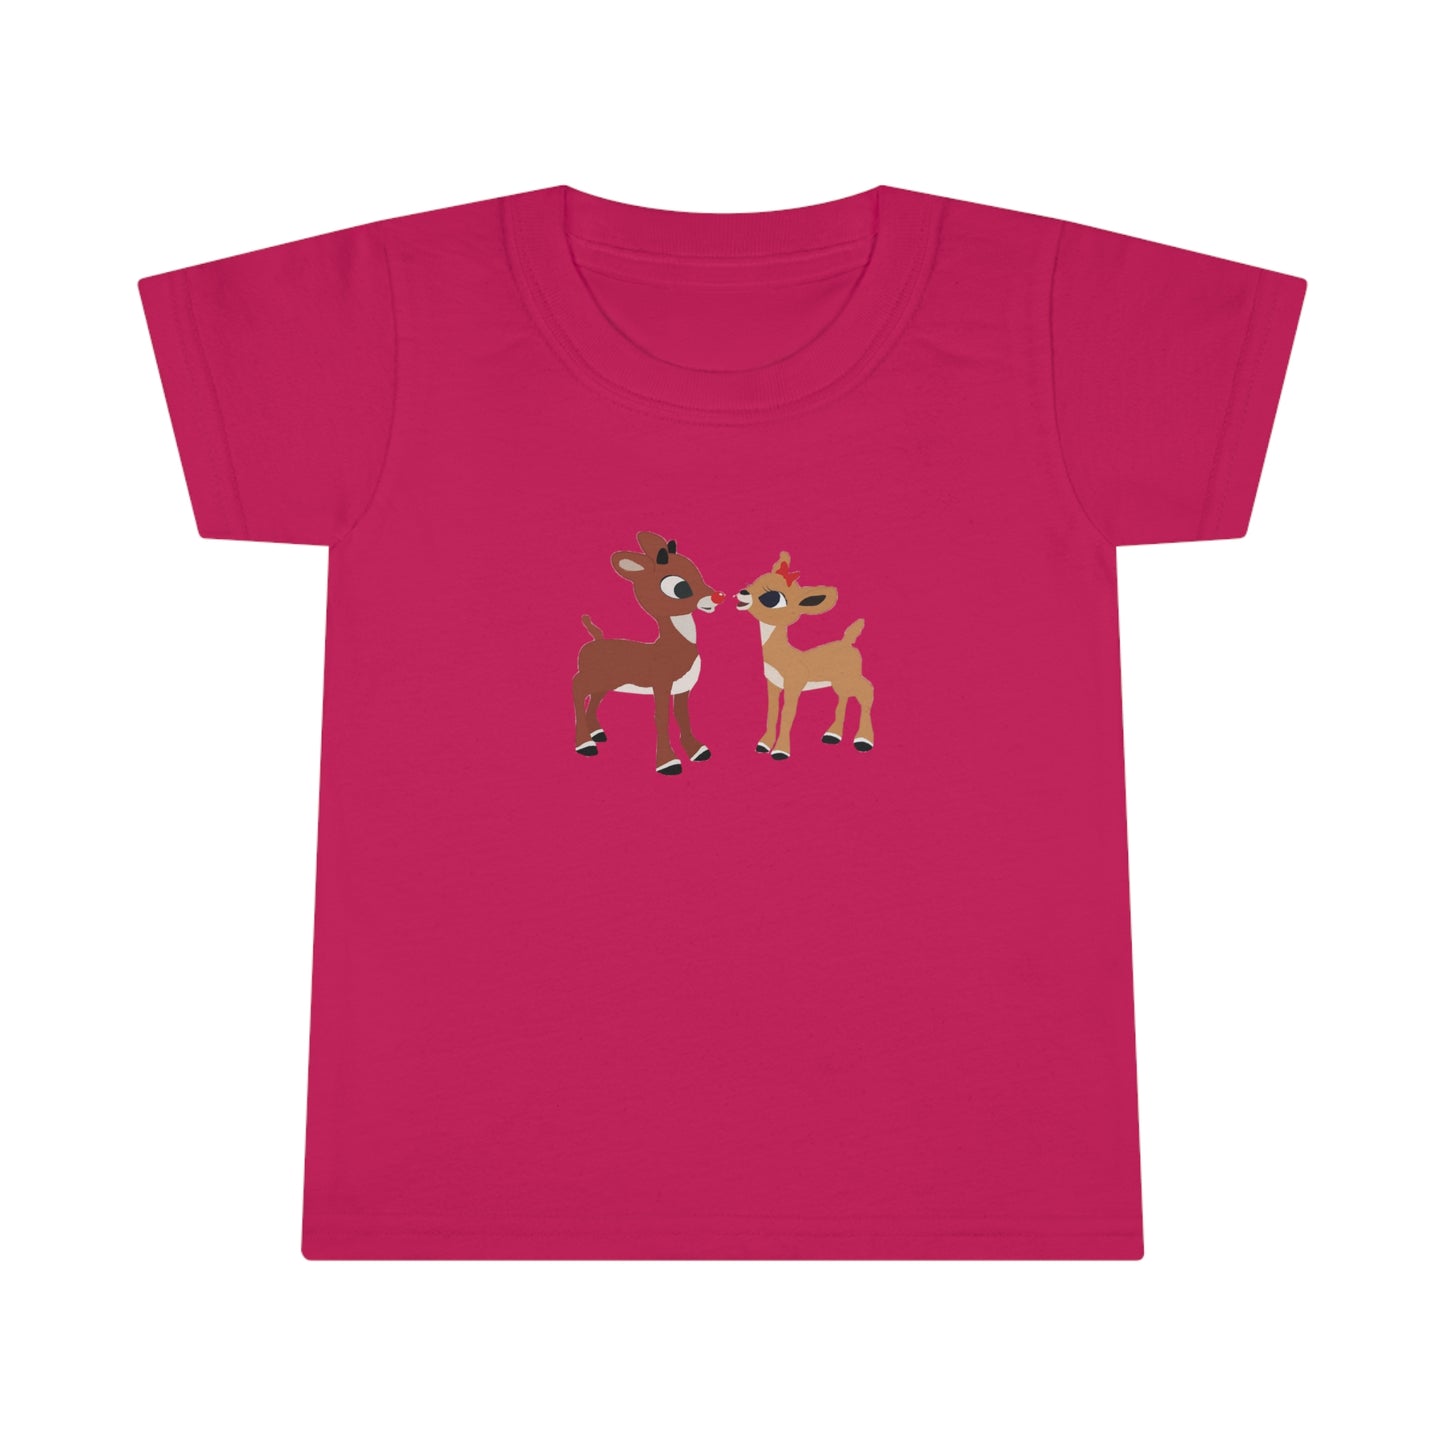 The Red Nose Reindeer Toddler T-shirt